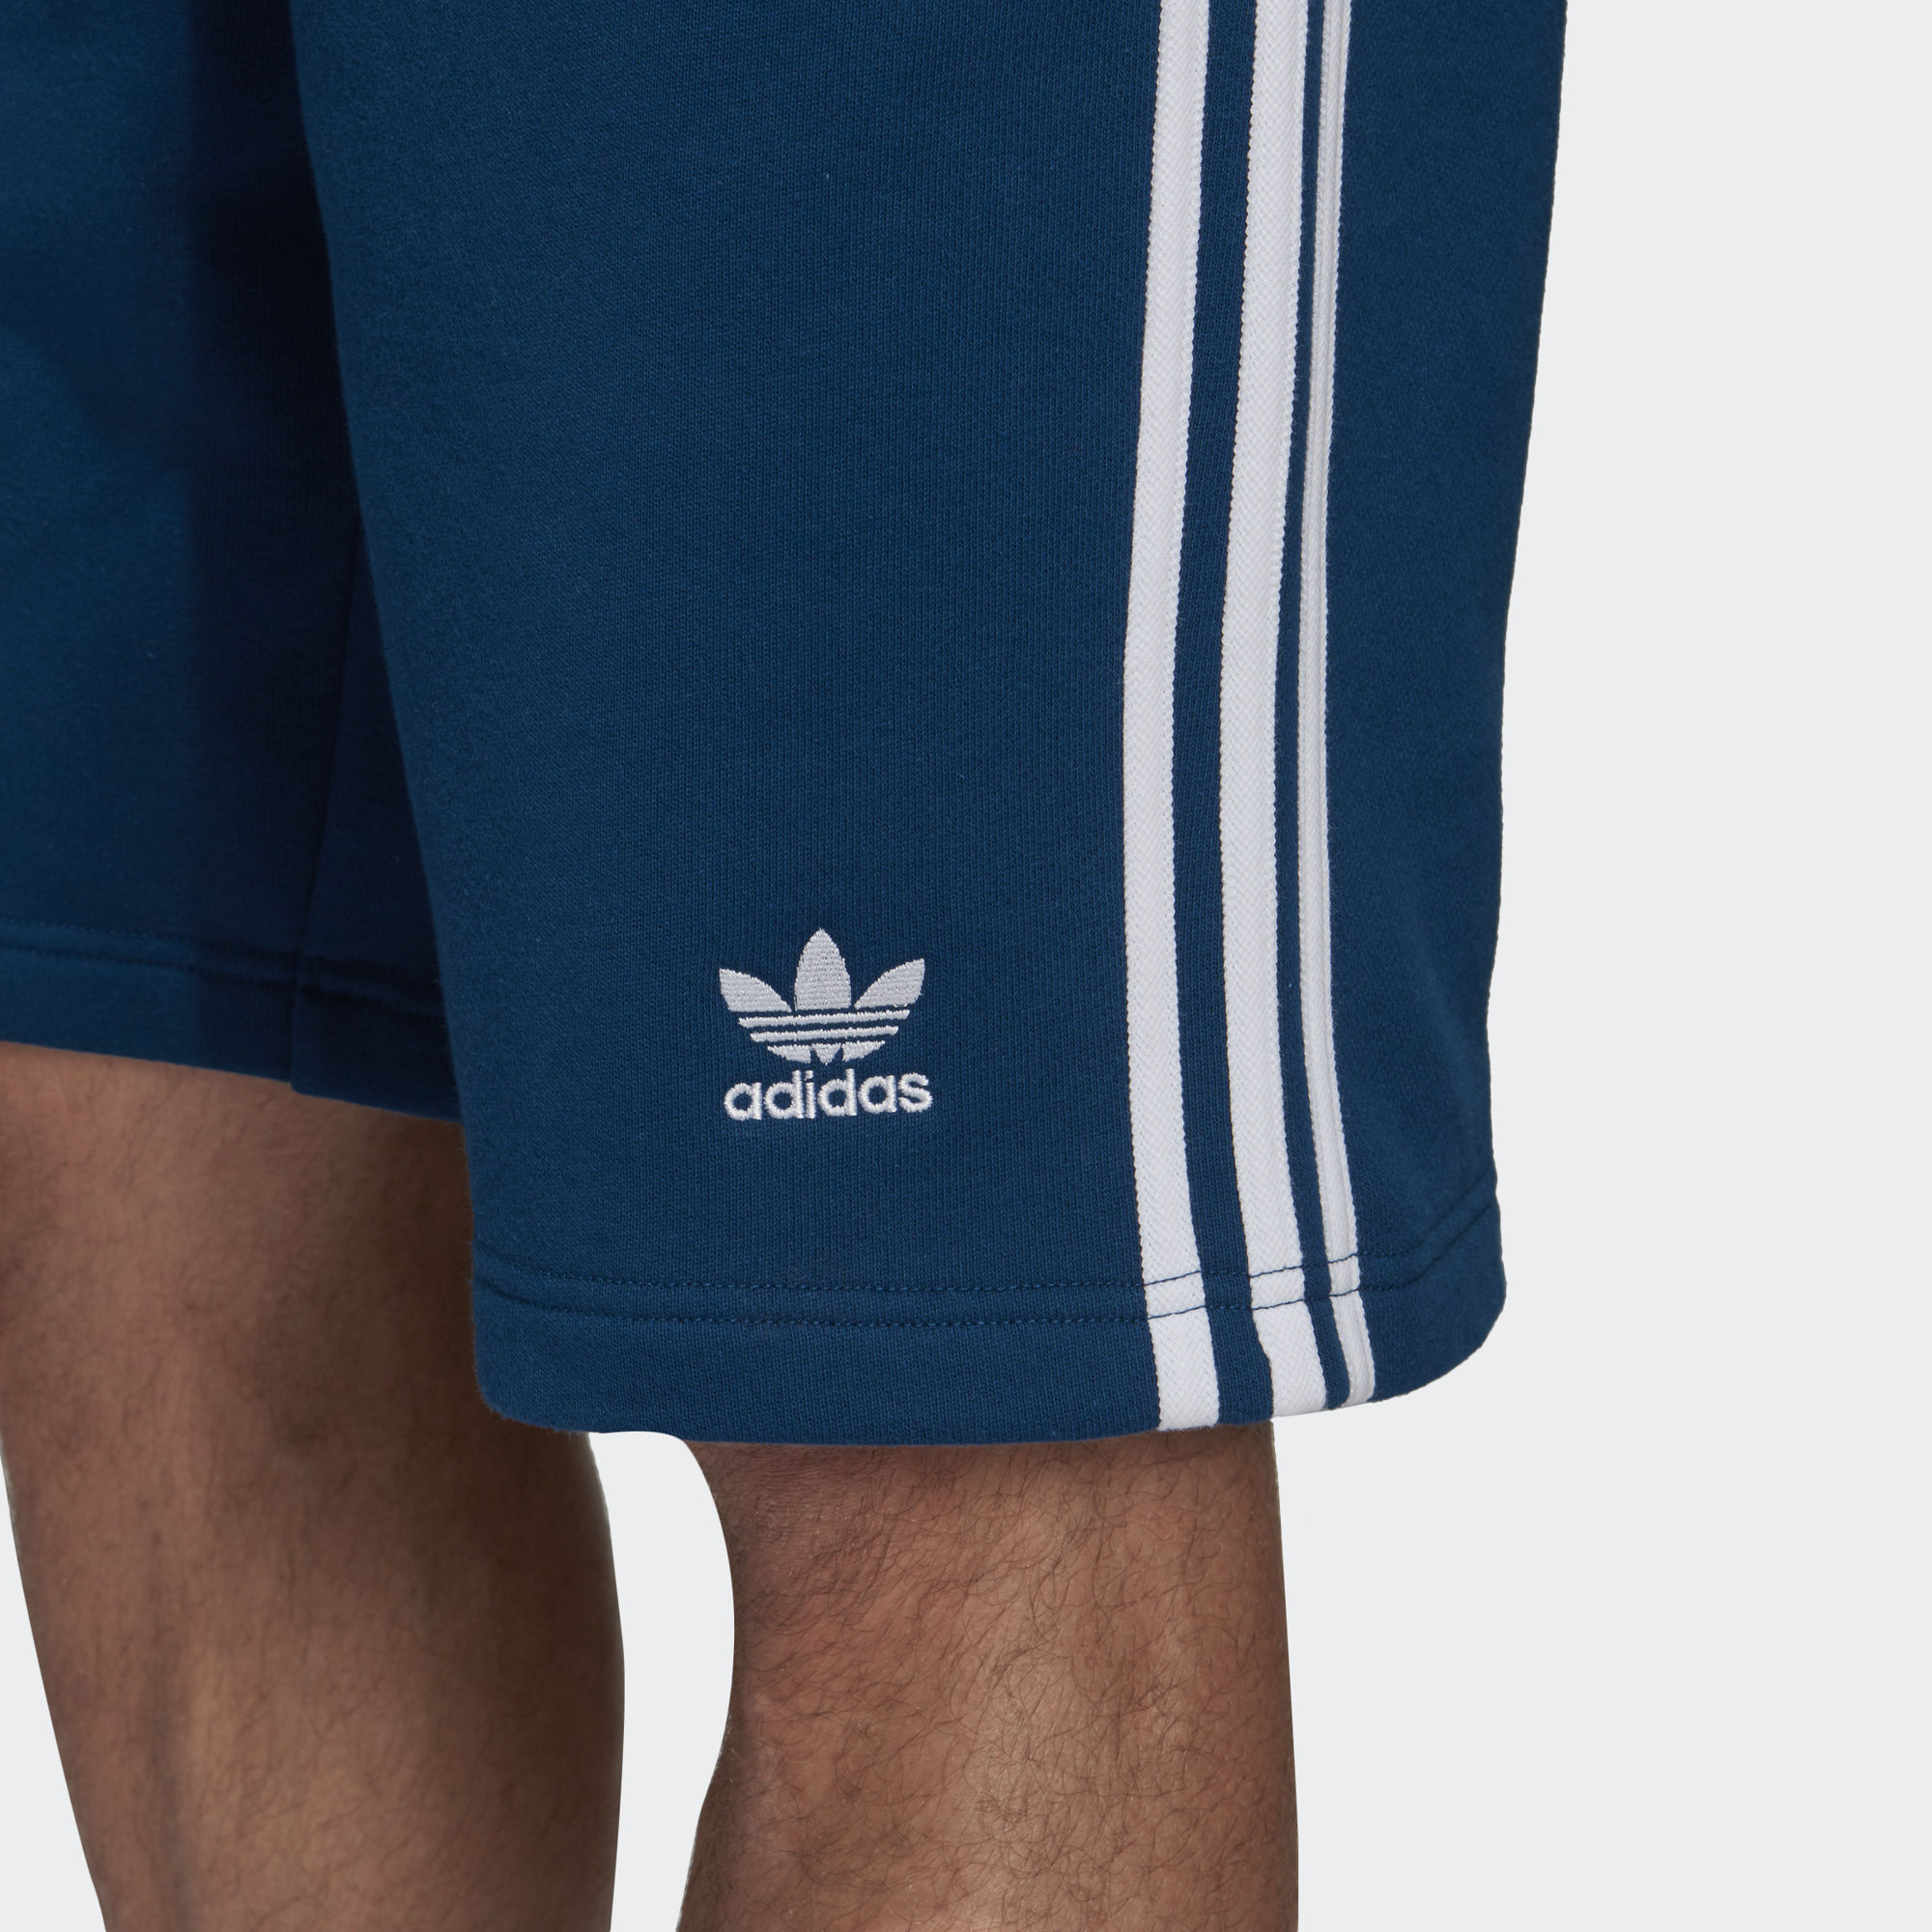 Adidas shorts. Шорты adidas Originals. Adidas Originals 3 Stripes. Шорты adidas Originals мужские. Шорты адидас мужские оригинал.